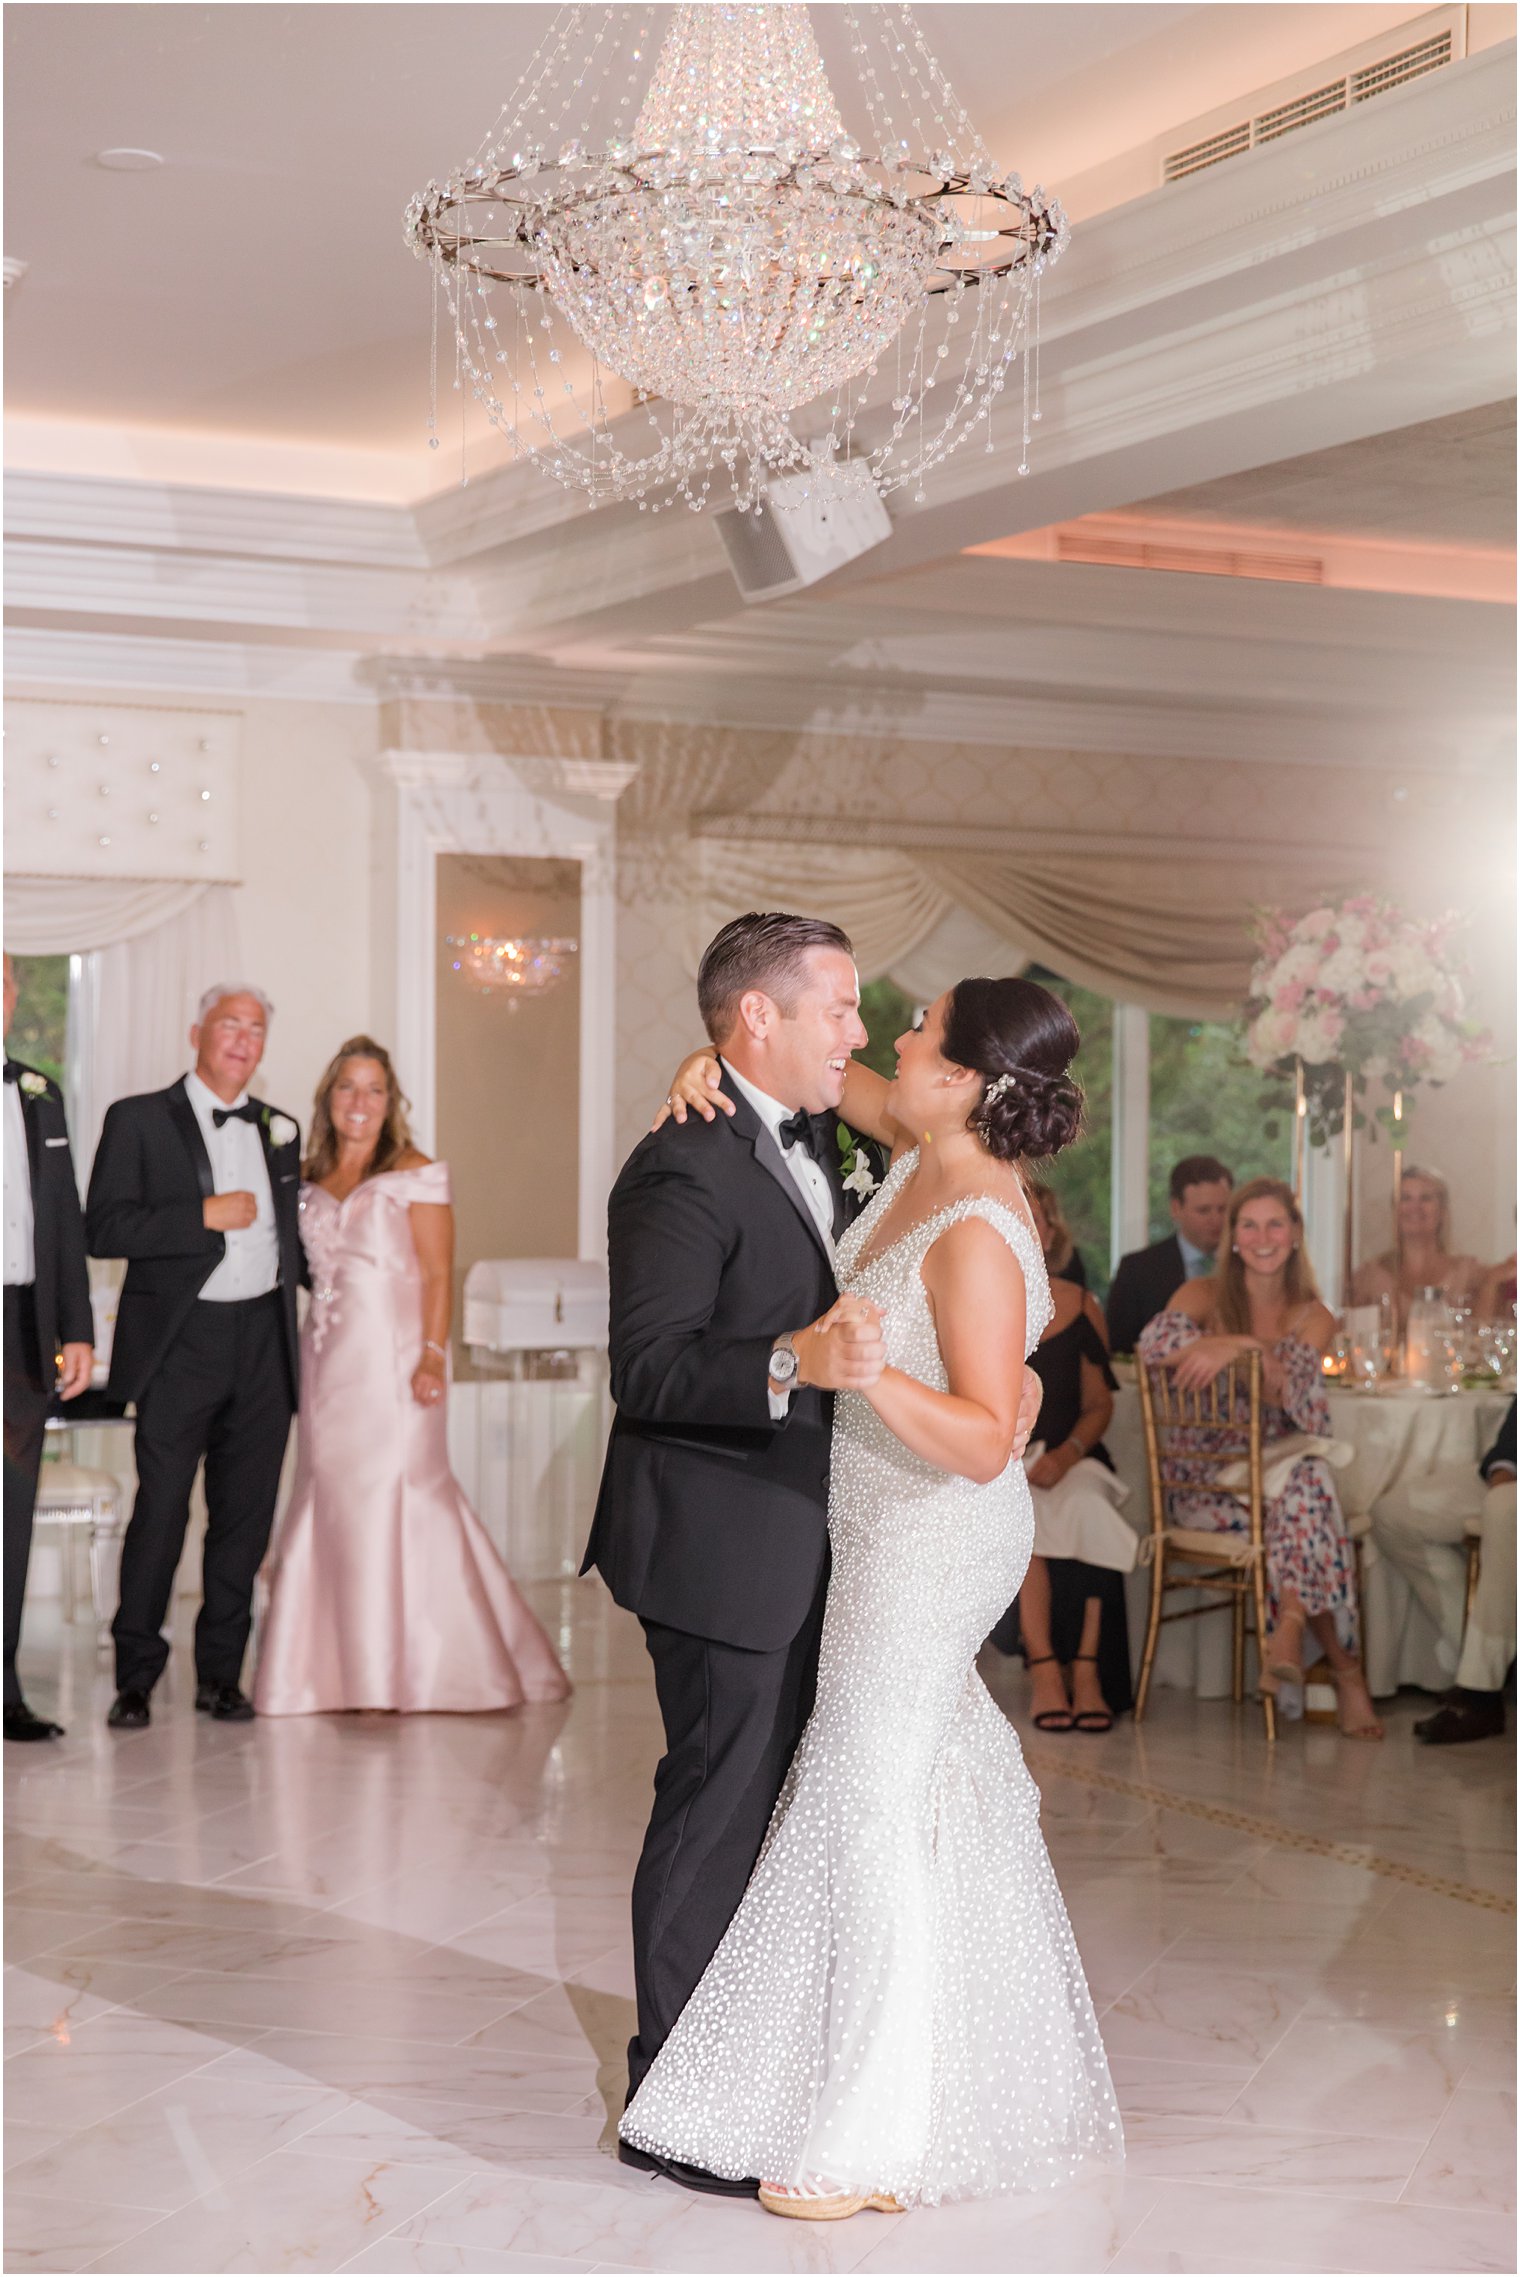 newlyweds dance during reception photographed by Ocean Township NJ wedding photographer Idalia Photography